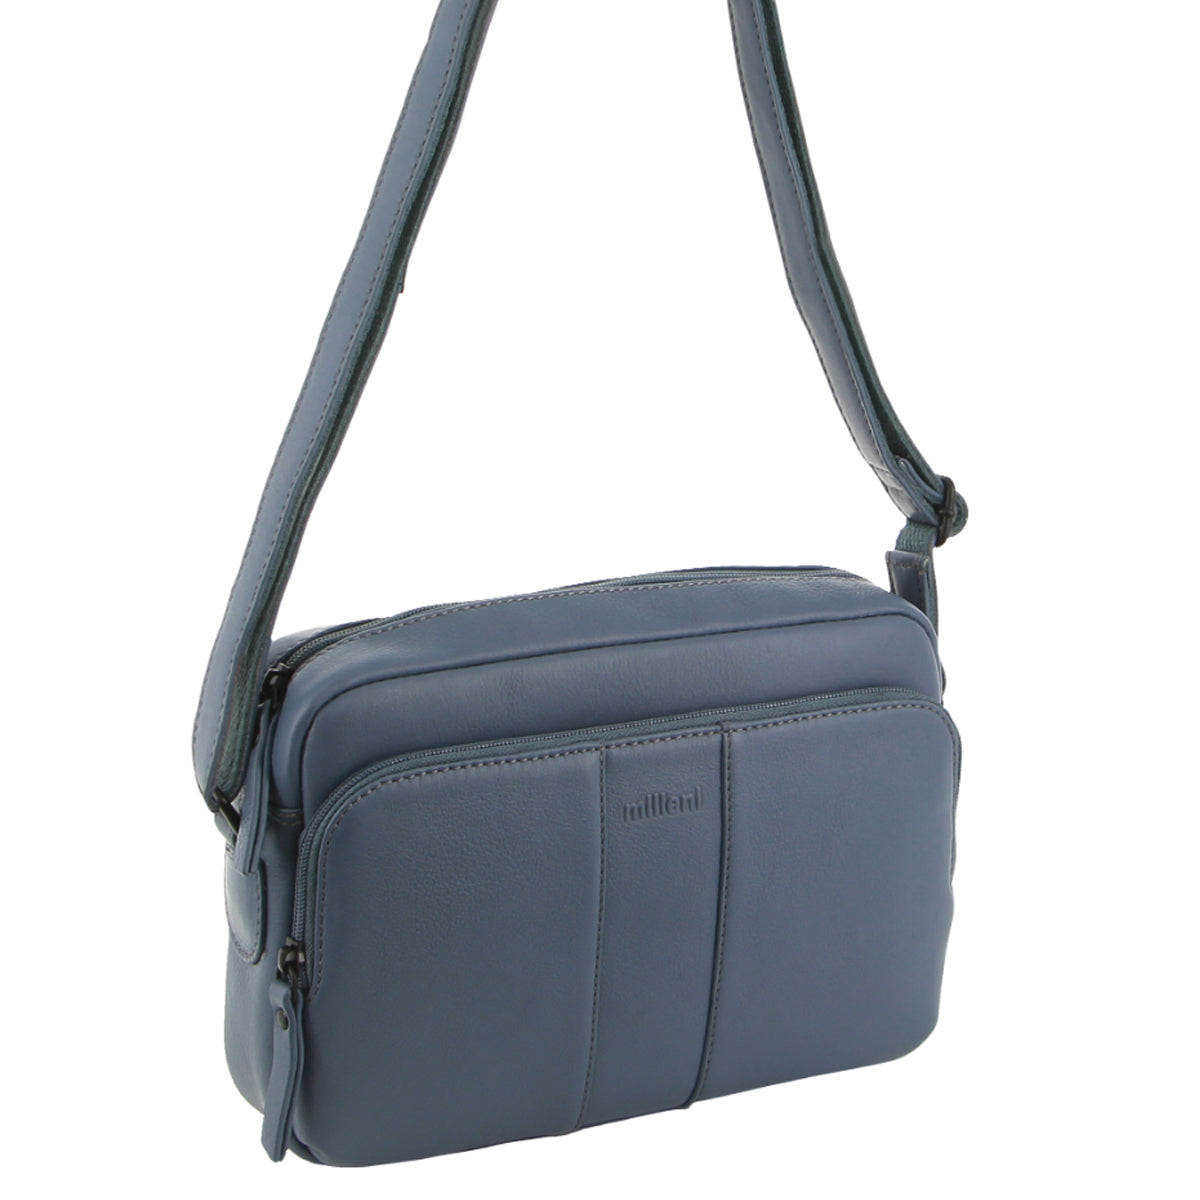 Milleni - NL3871 Small leather sidebag - Teal-3